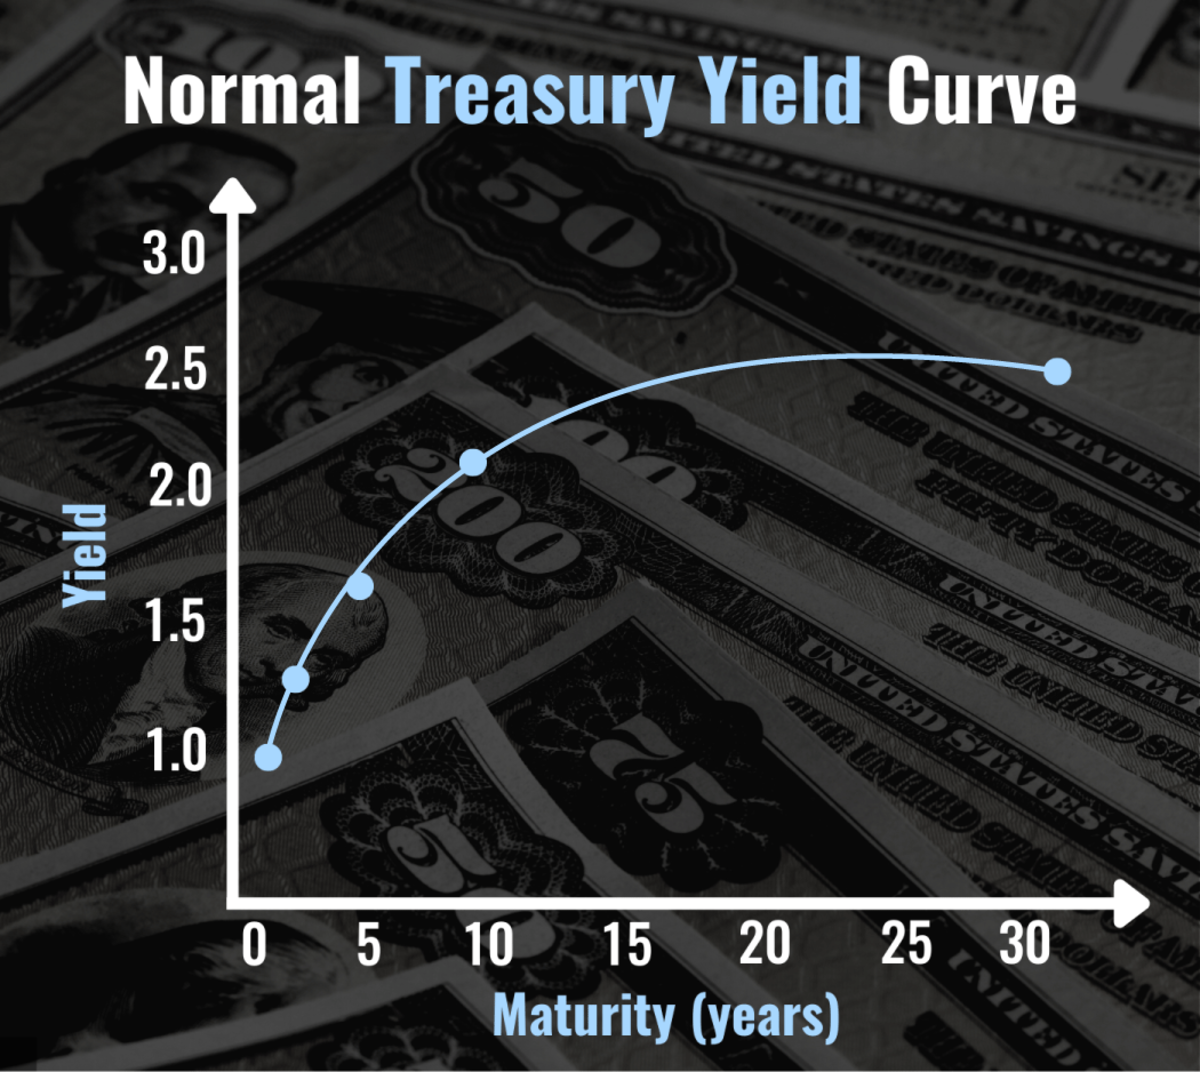 A "normal" Treasury yield chart slopes upward.